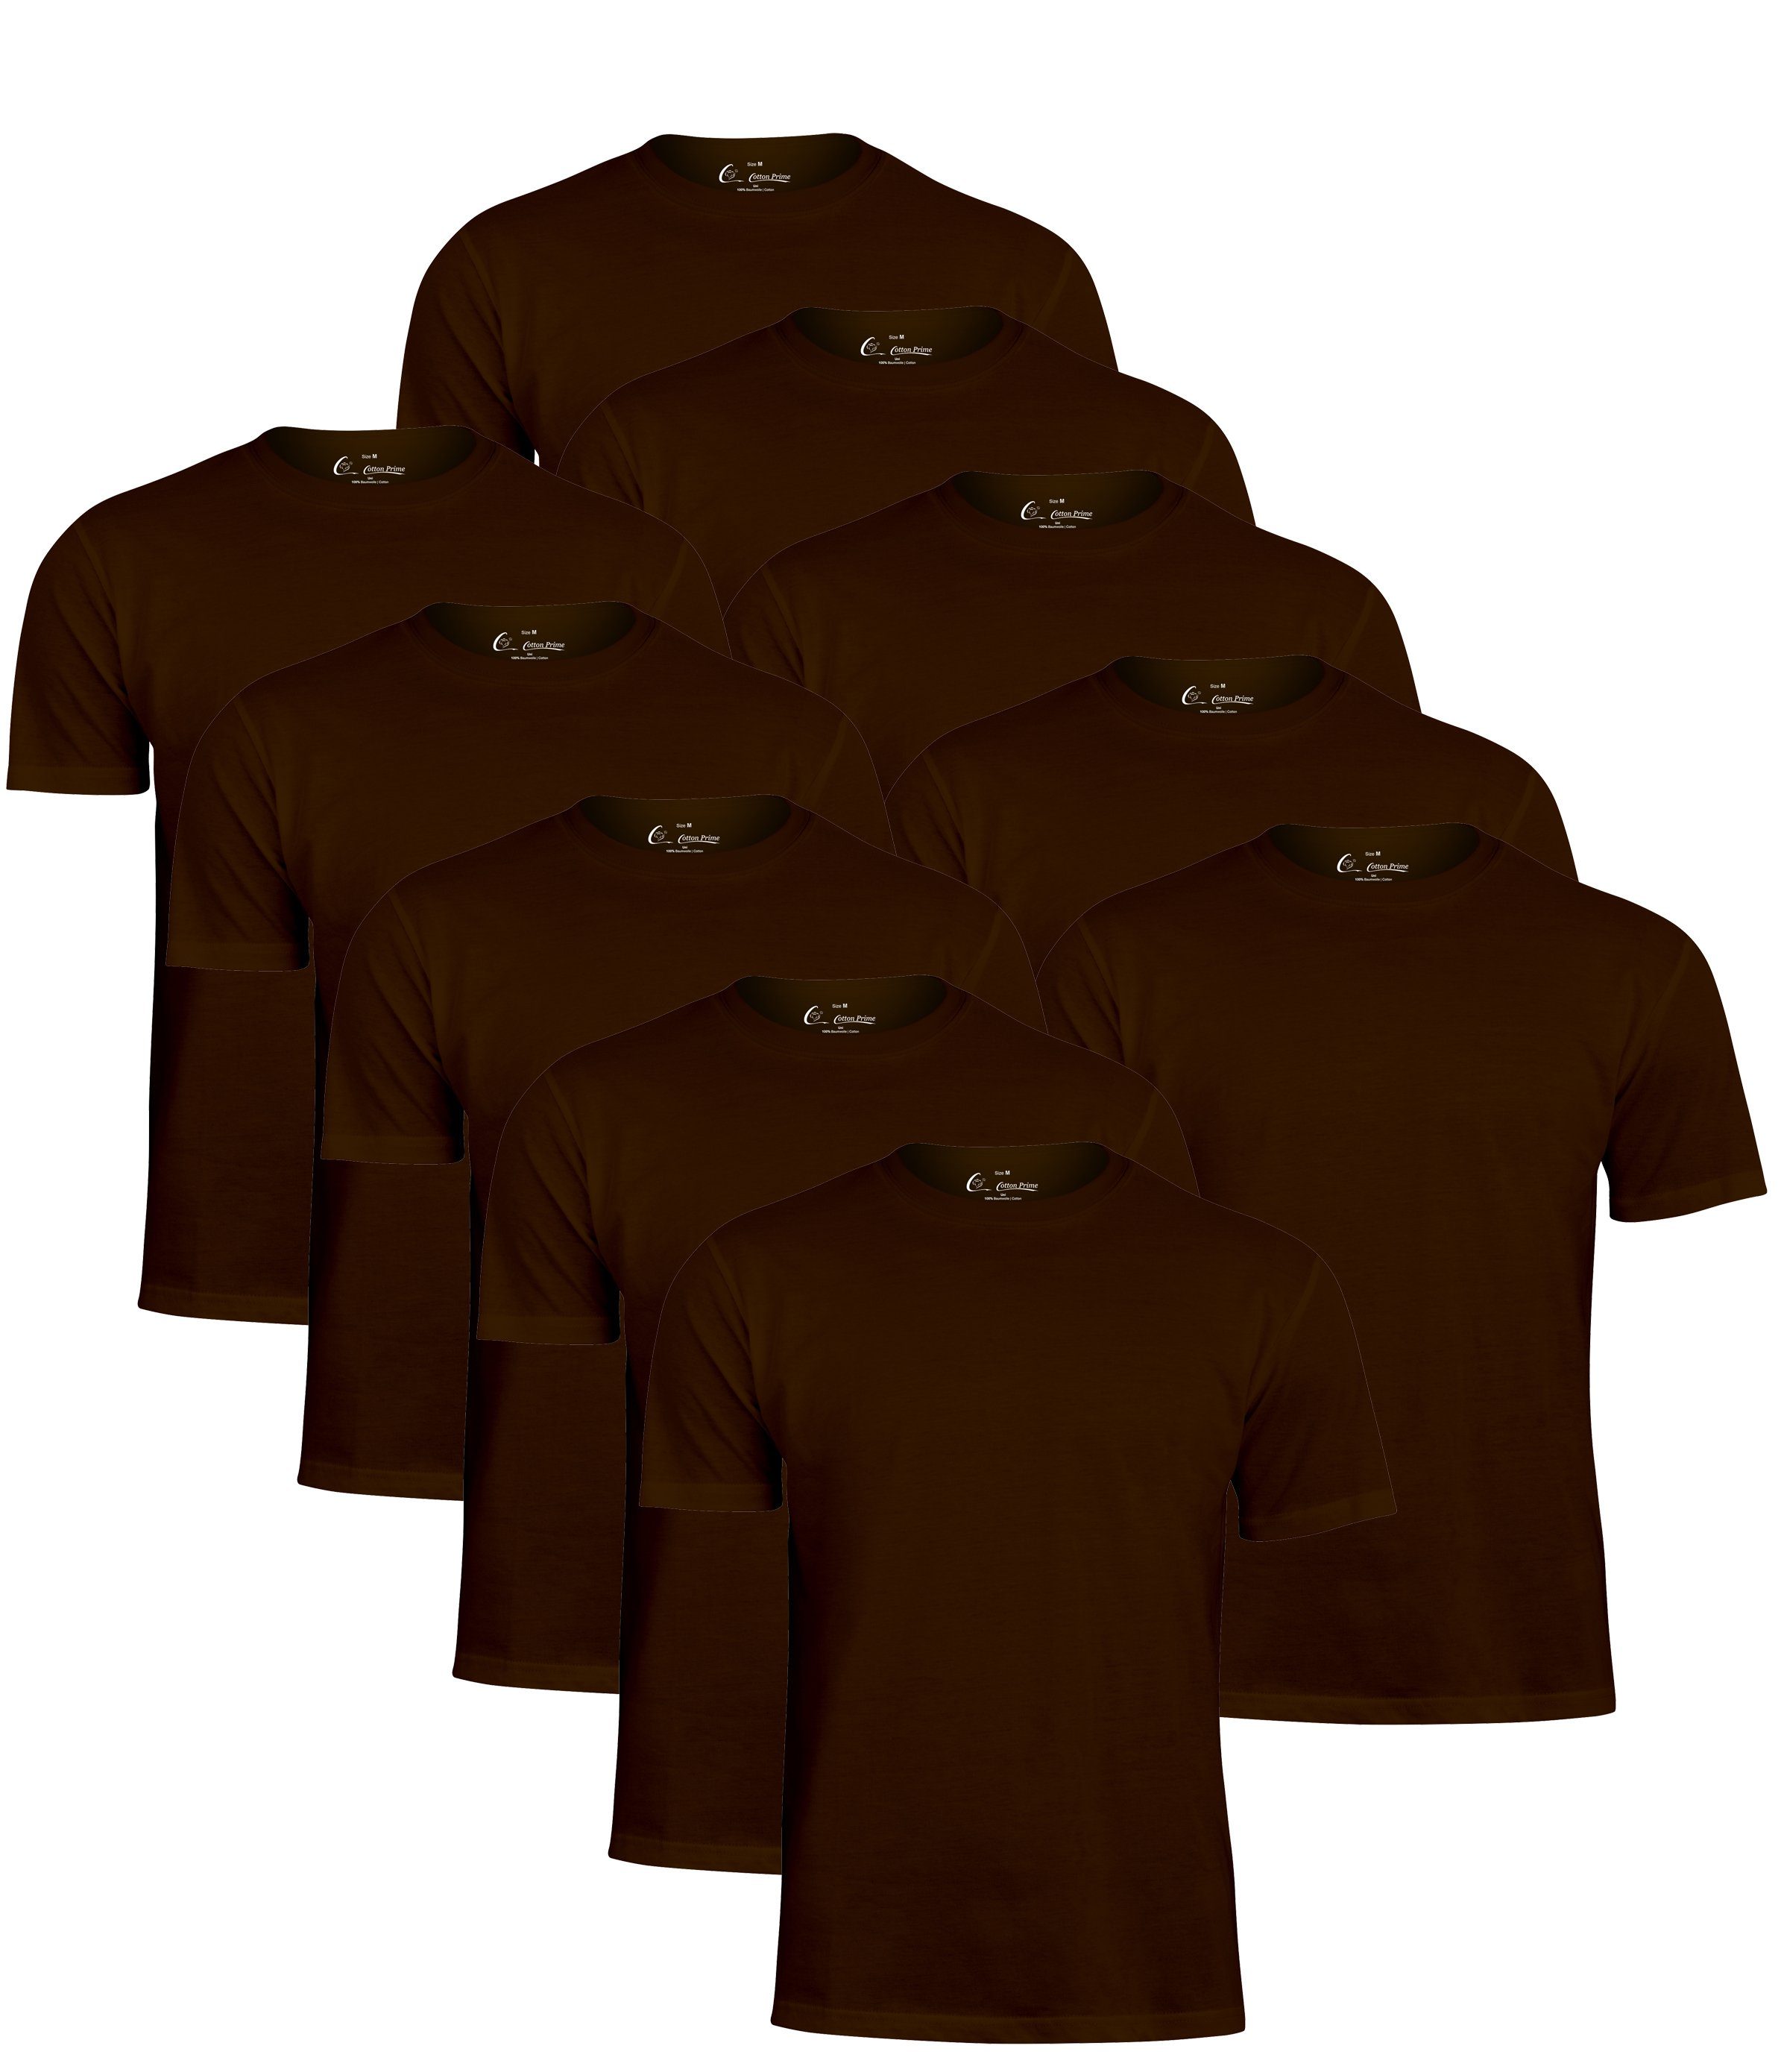 O-Neck - Braun Cotton Tee T-Shirt Prime®